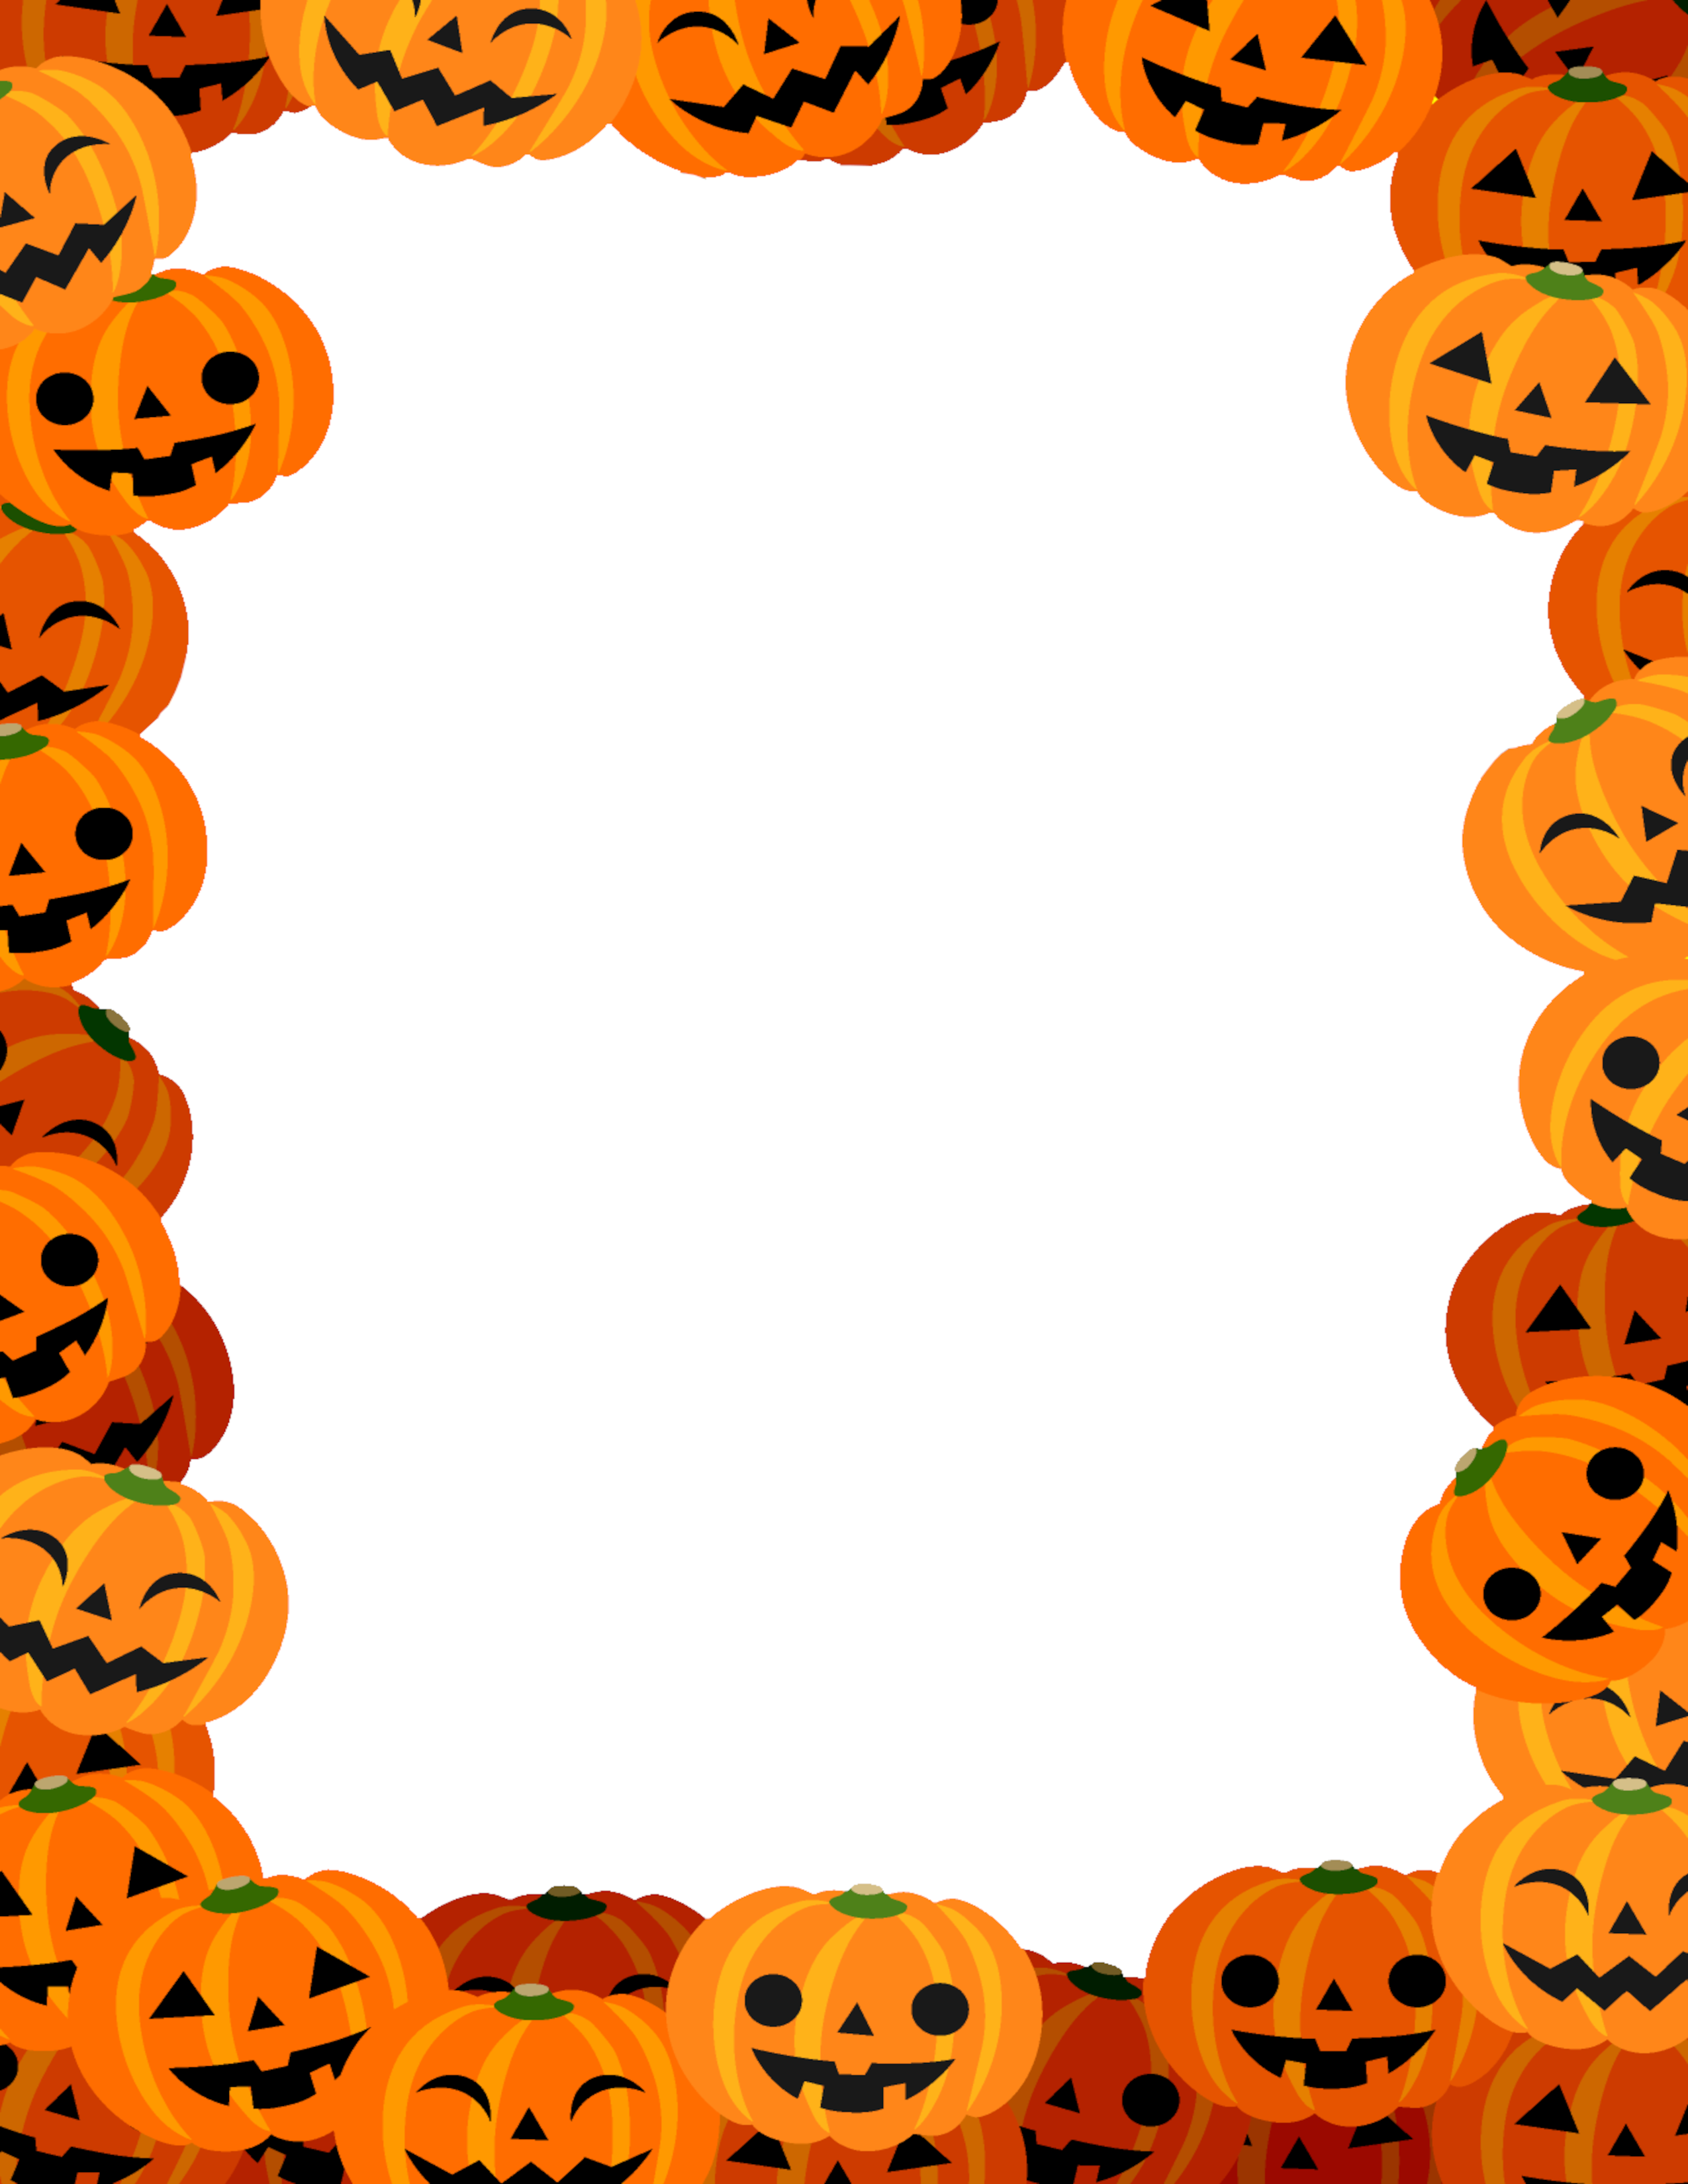 Halloween pumpkin border 2